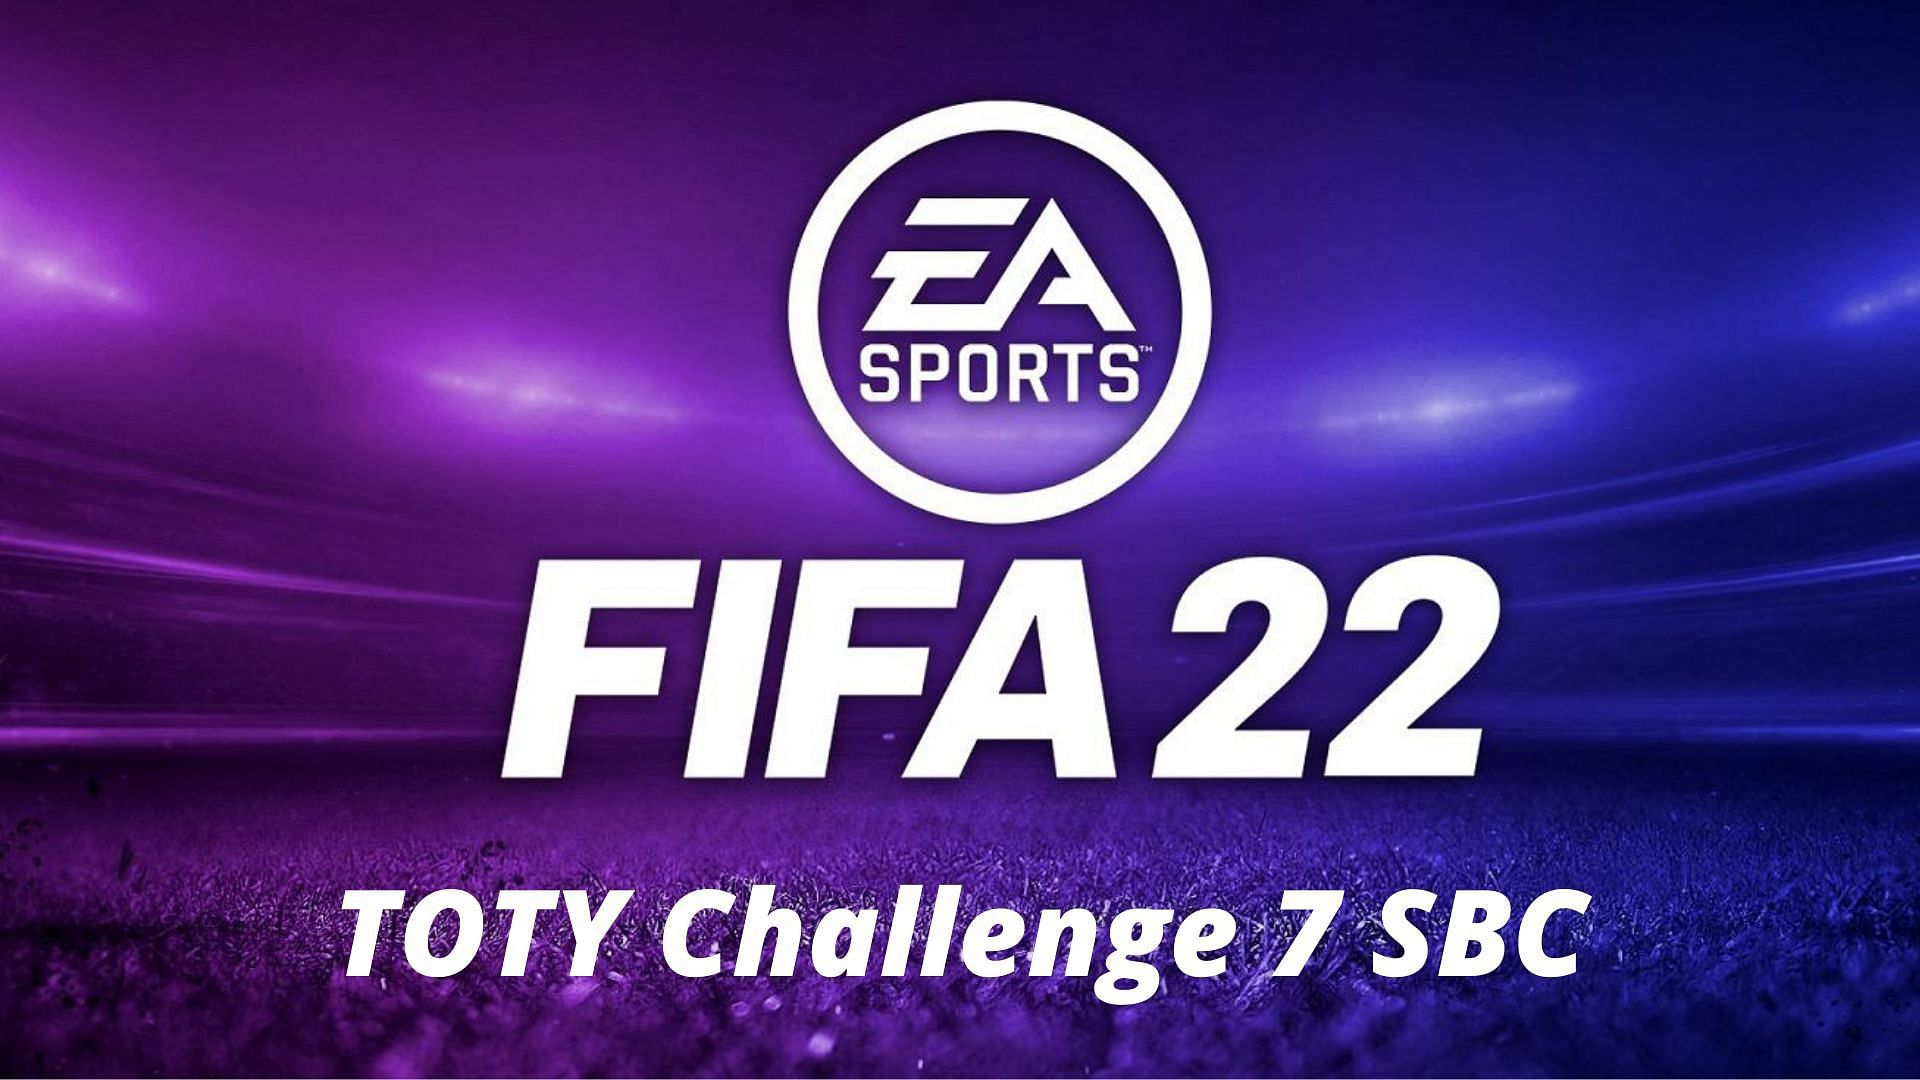 TOTY Challenge 7 SBC is live in FIFA 22 (Image via Sportskeeda)